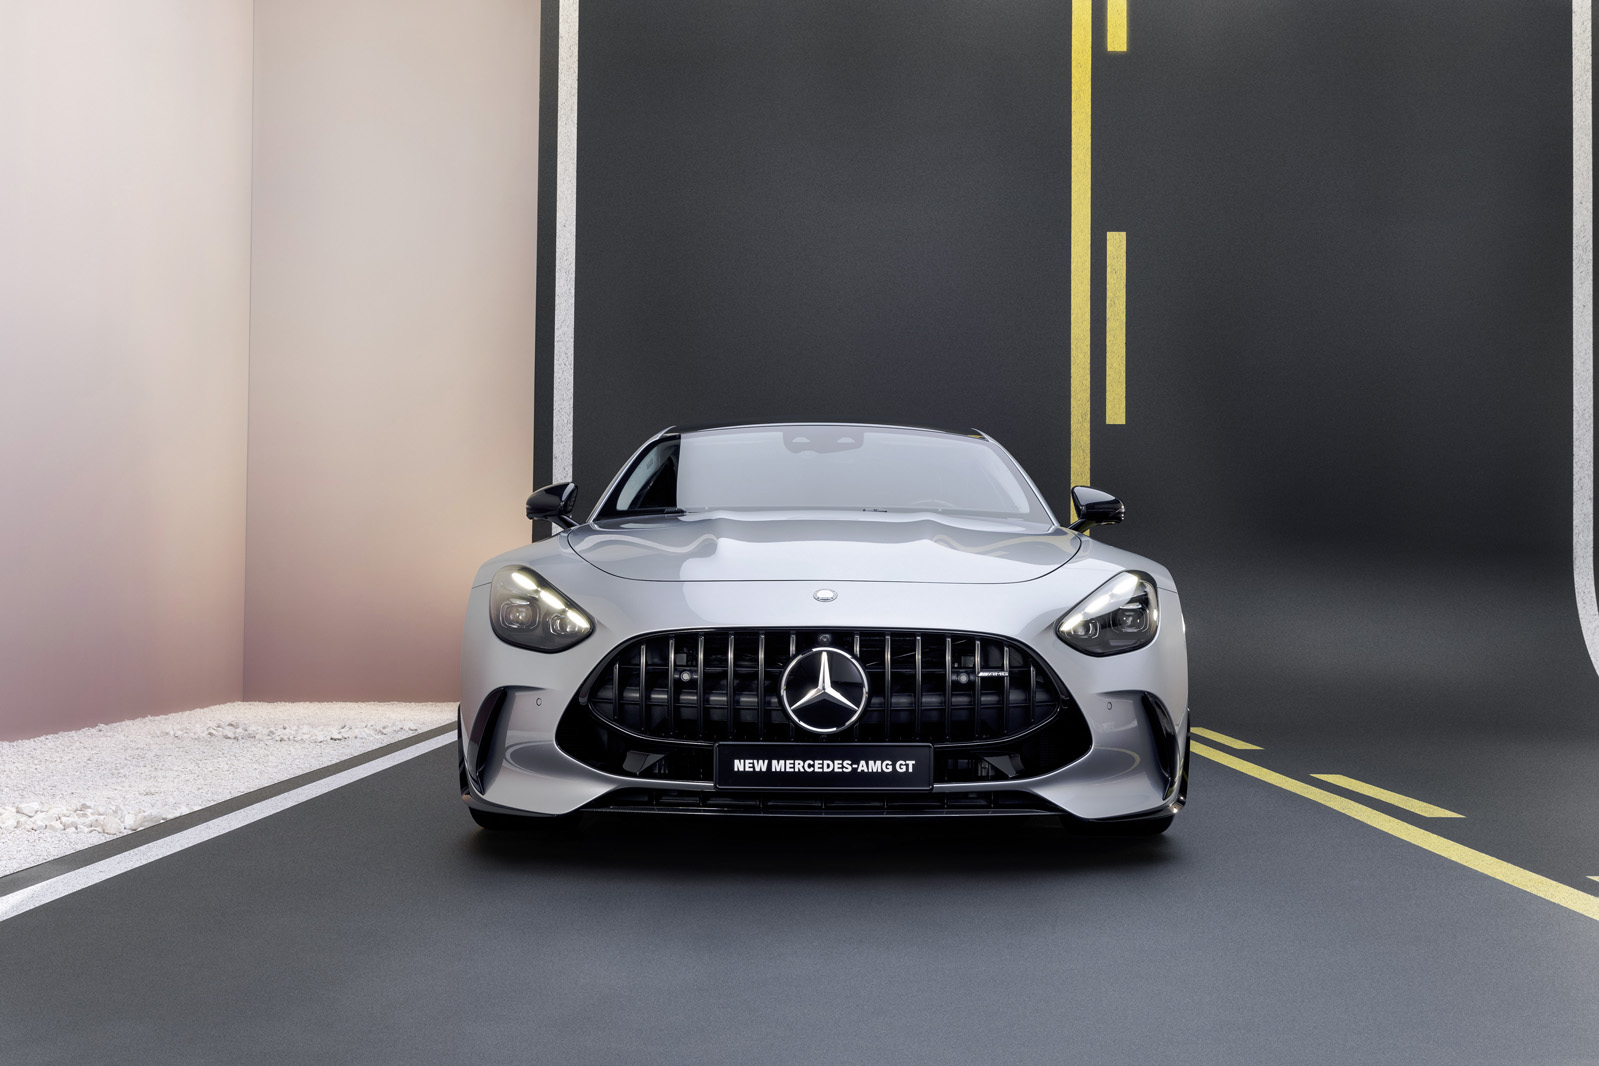 New 2024 Mercedes-AMG GT Concept E Performance arrives